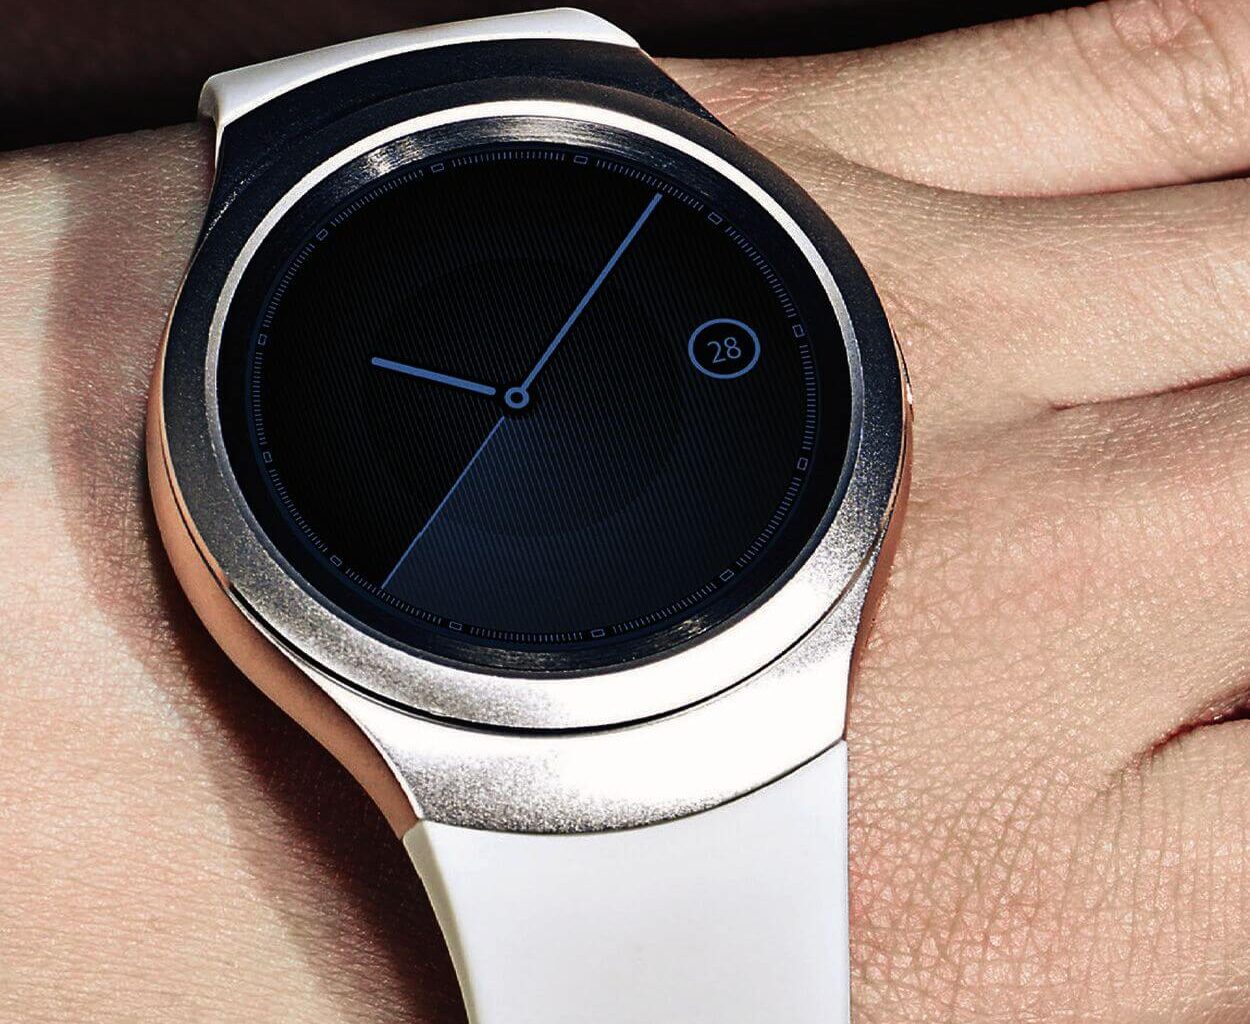 Samsung galaxy gear s2 smartwatch 34